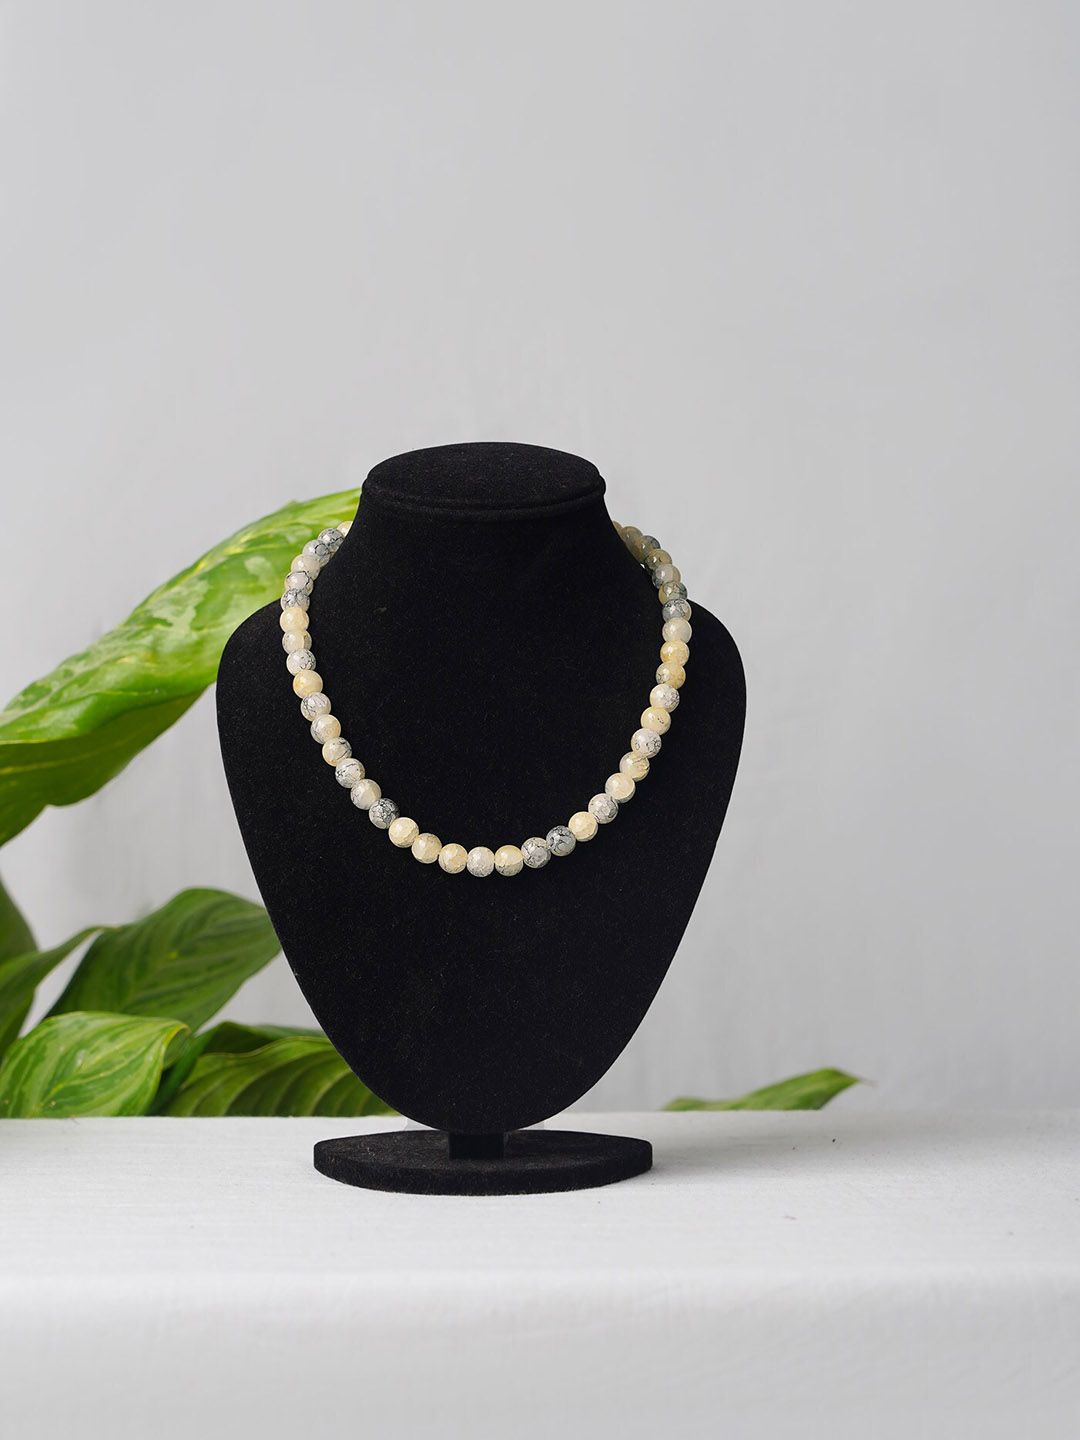 Unnati Silks Cream-Coloured Beads Necklace Price in India